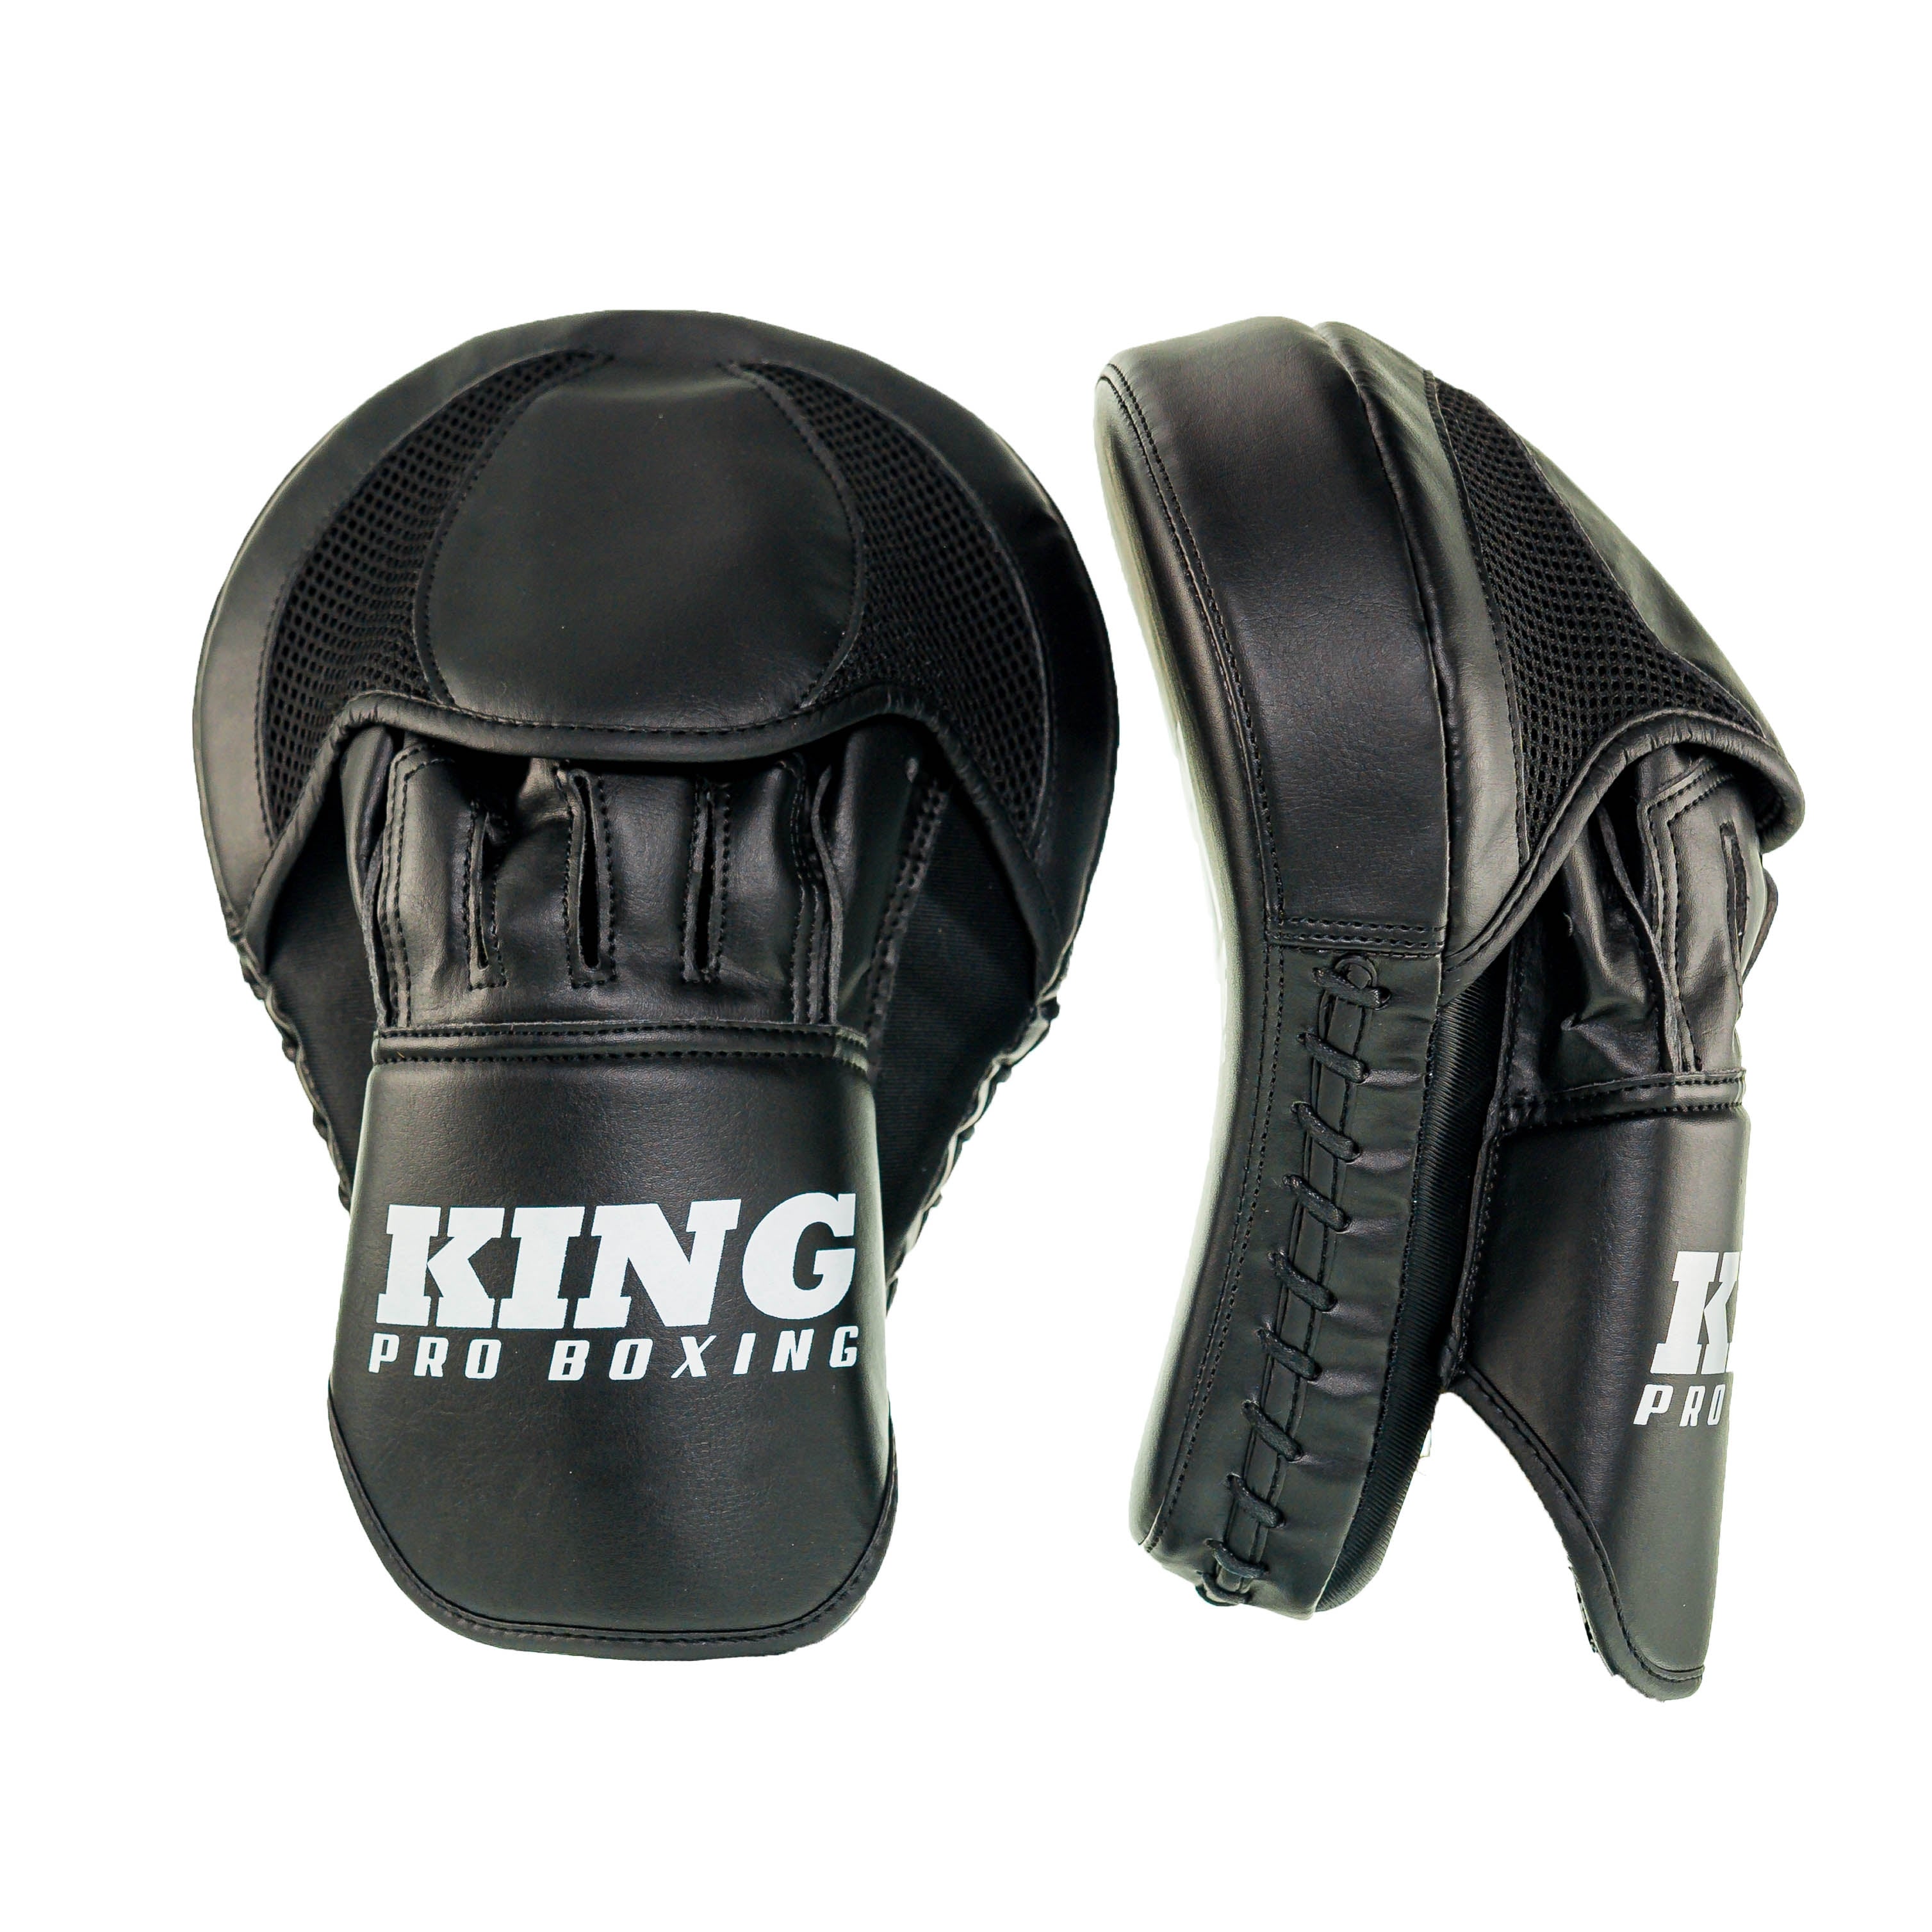 King PRO boxing Mitts - FM REVO